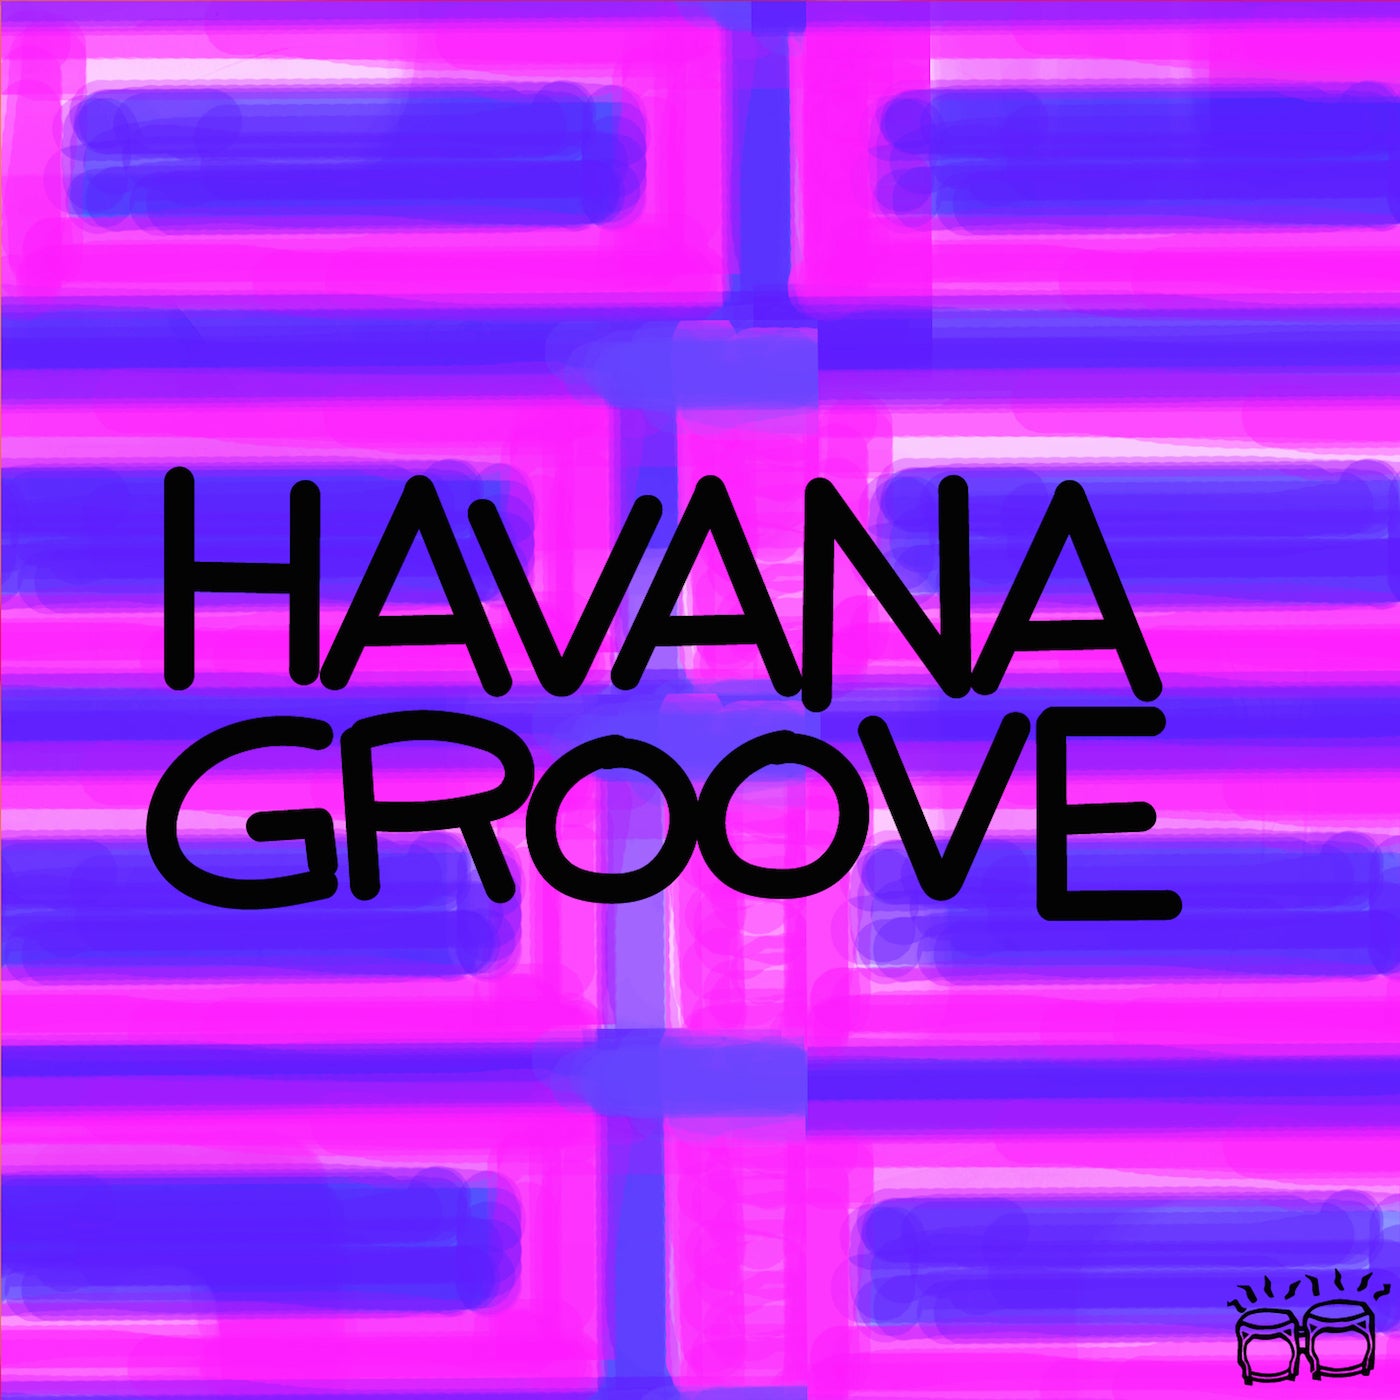 Havana Groove EP